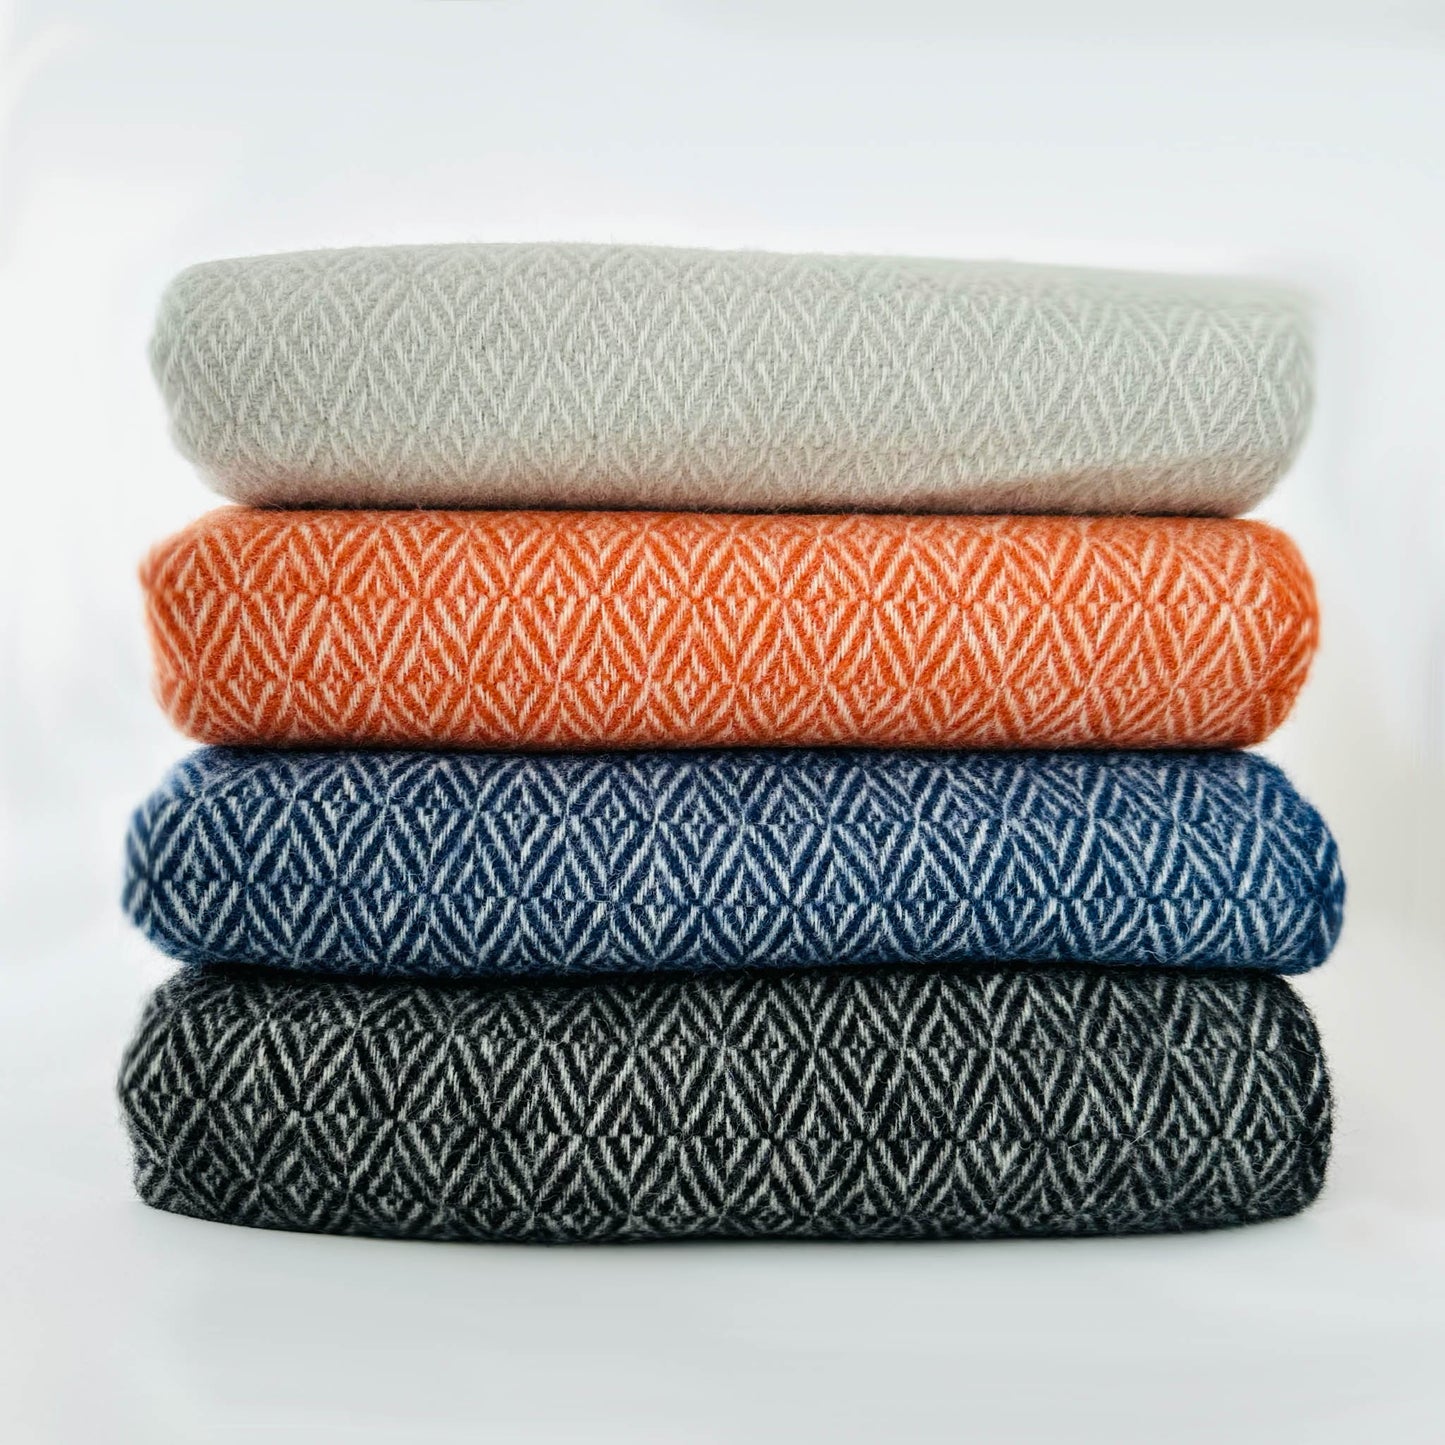 Nordic Chill Silva 100% Wool Throw 130x170cm, Frost Grey (6796500205633)